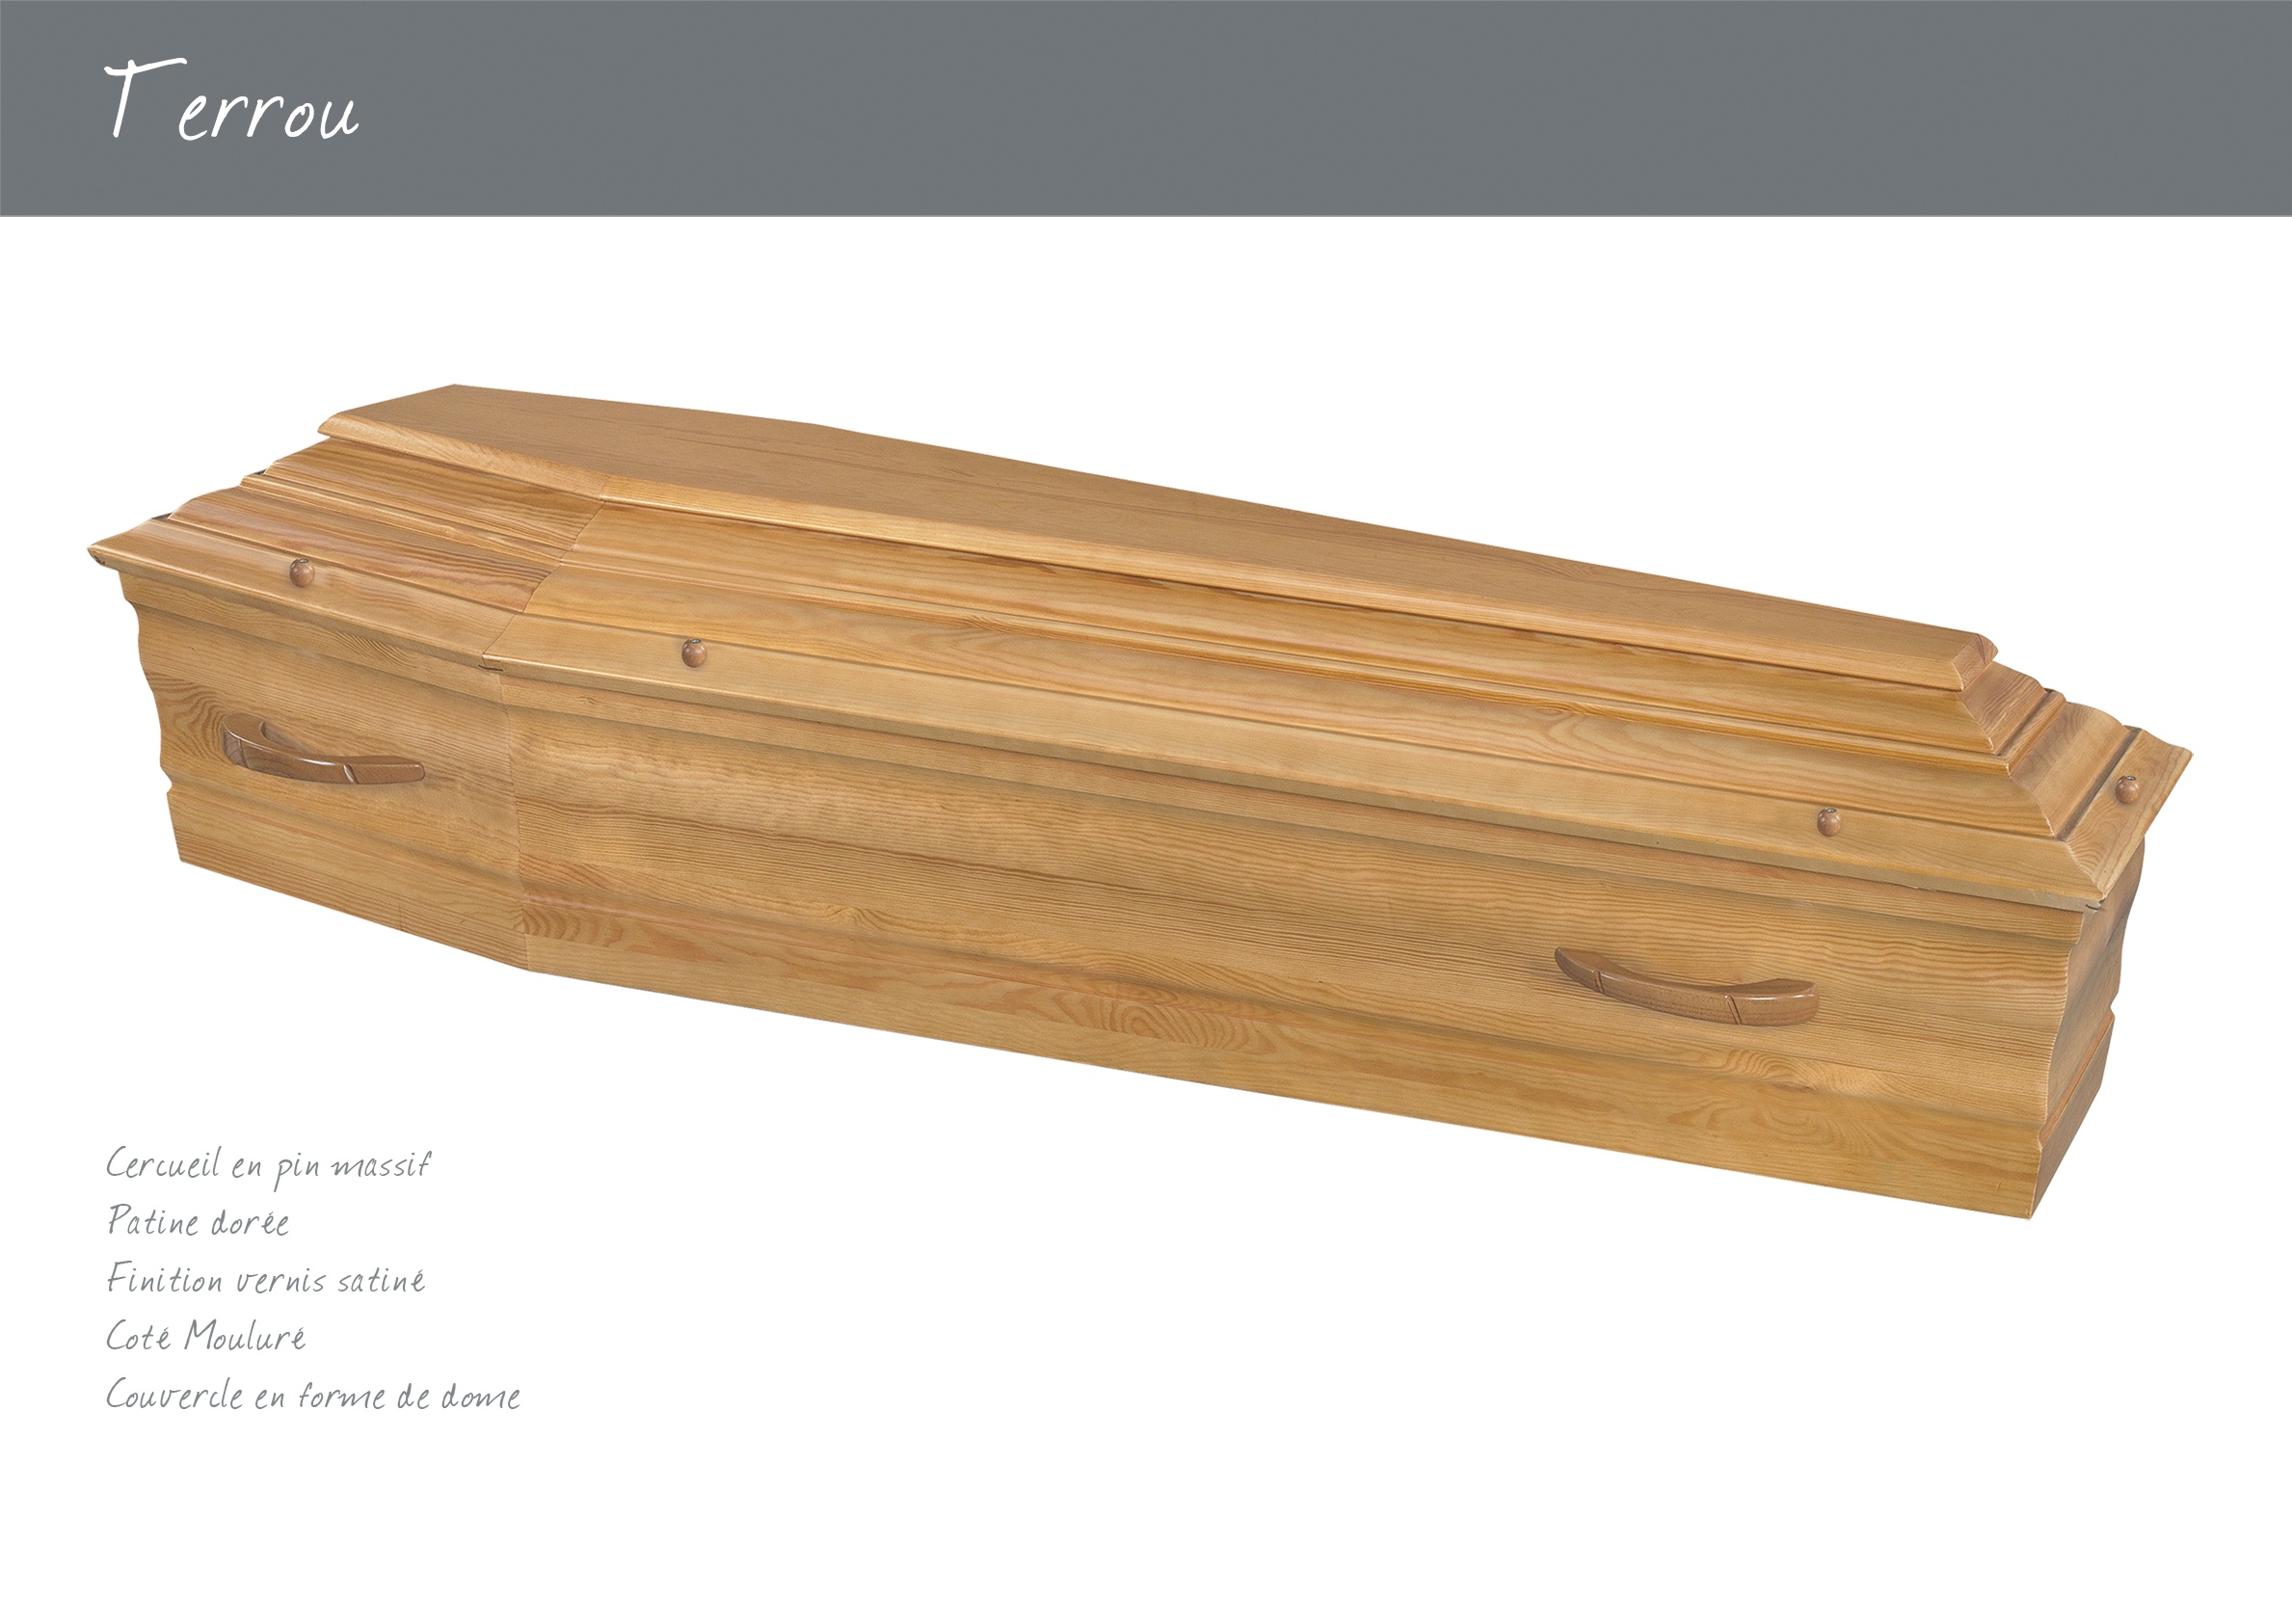 Cercueil Terrou, pin massif, 1260€